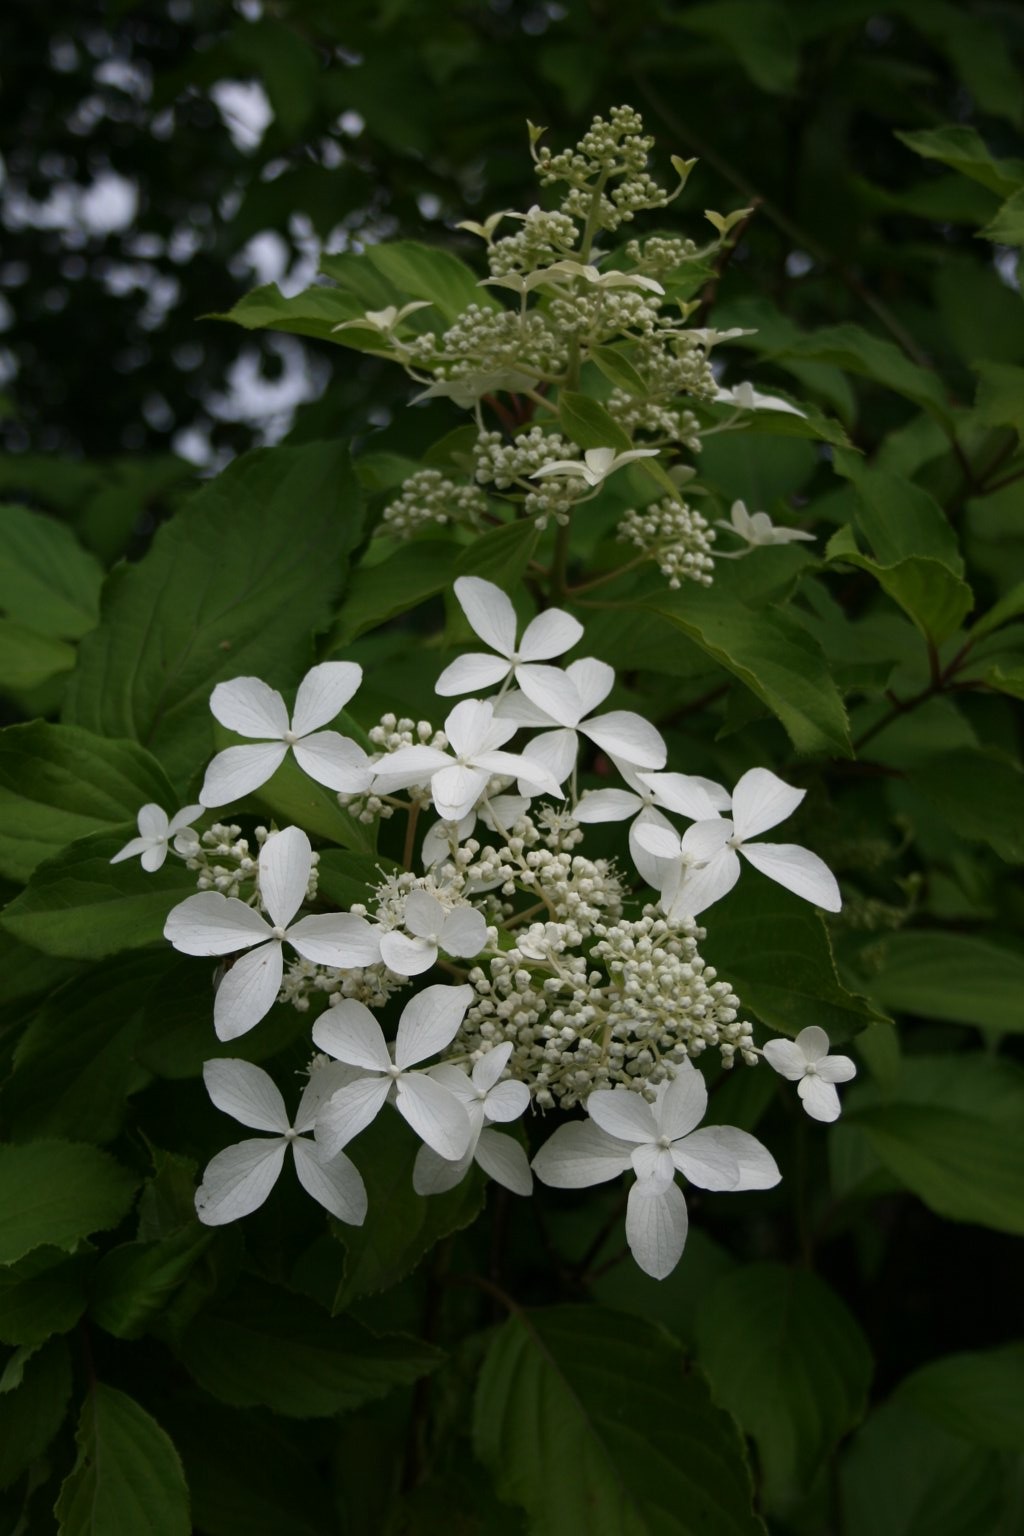 Hortensja bukietowa "Great Star" / Hydrangea paniculata "Great Star"